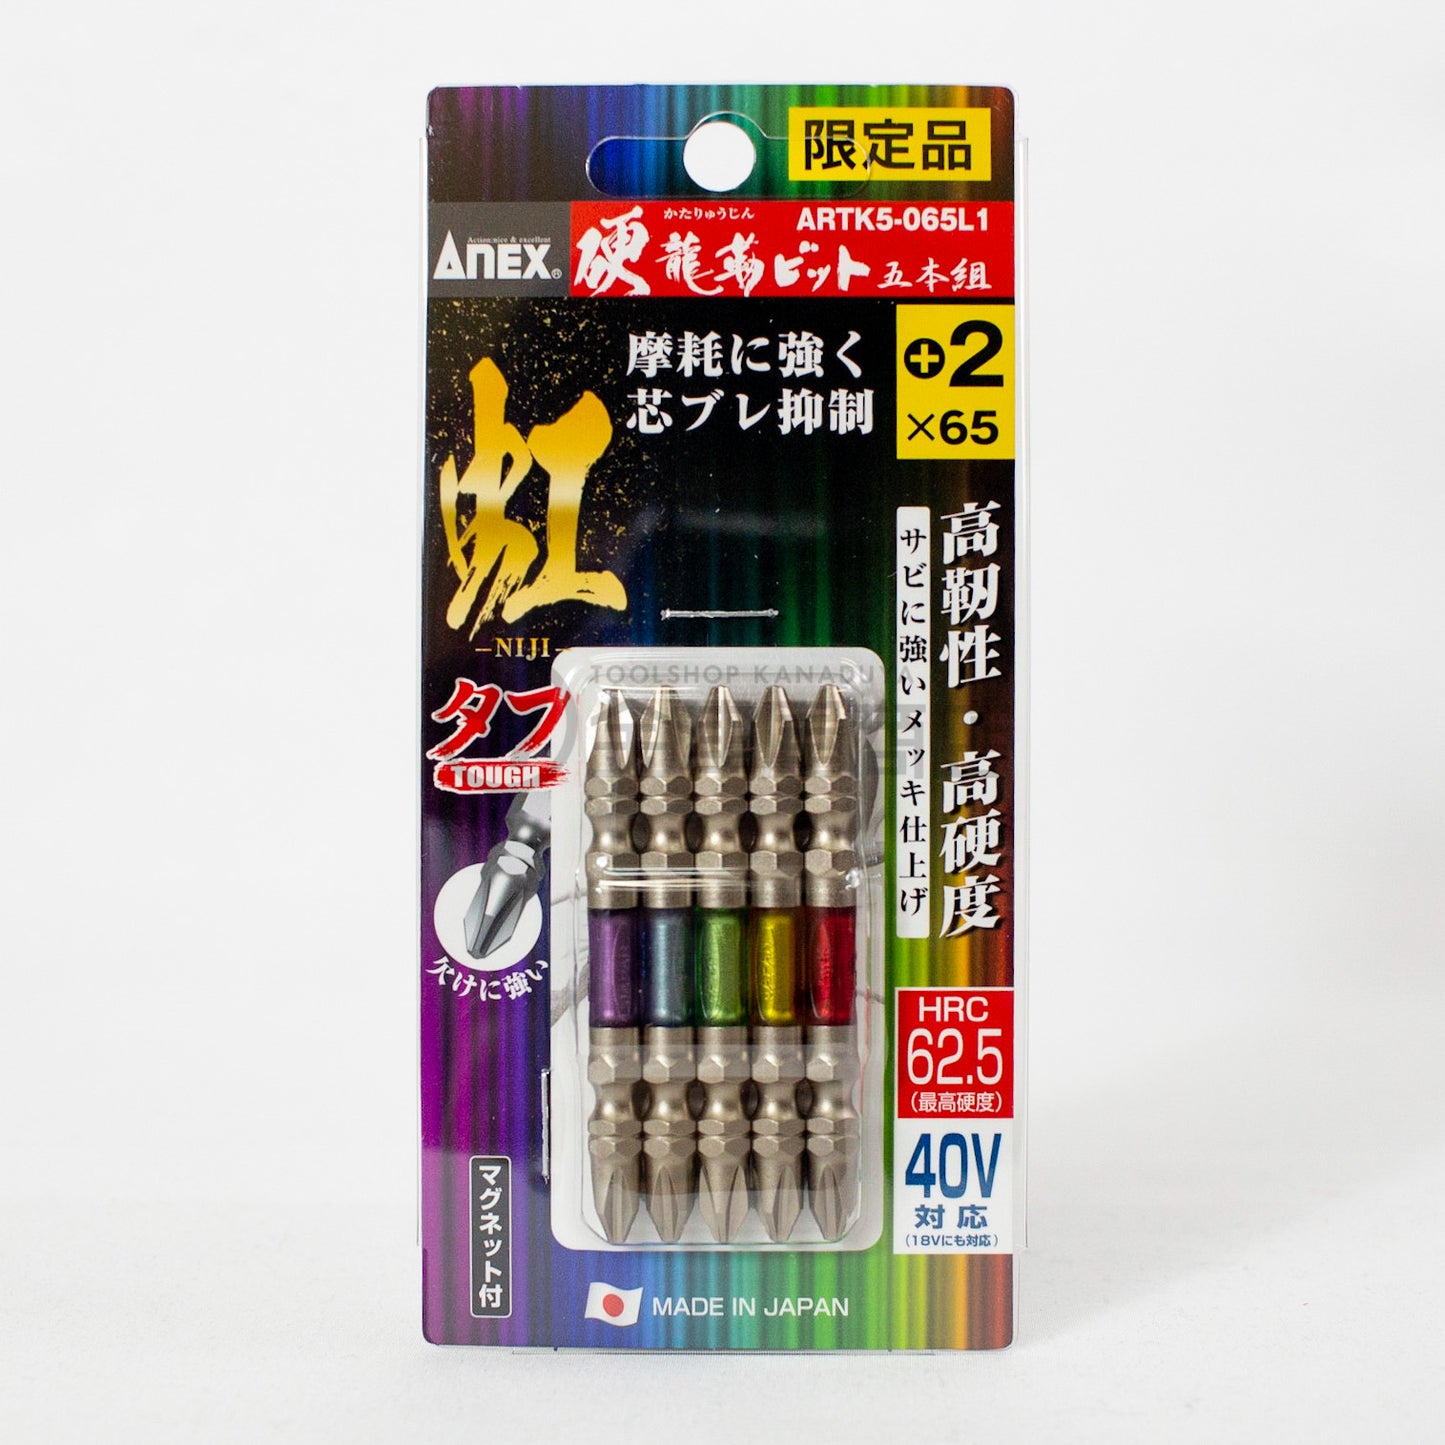 ANEX 硬龍靭ビットタフ 限定カラー 虹 5本組セット ARTK5-ビット-金津屋商店